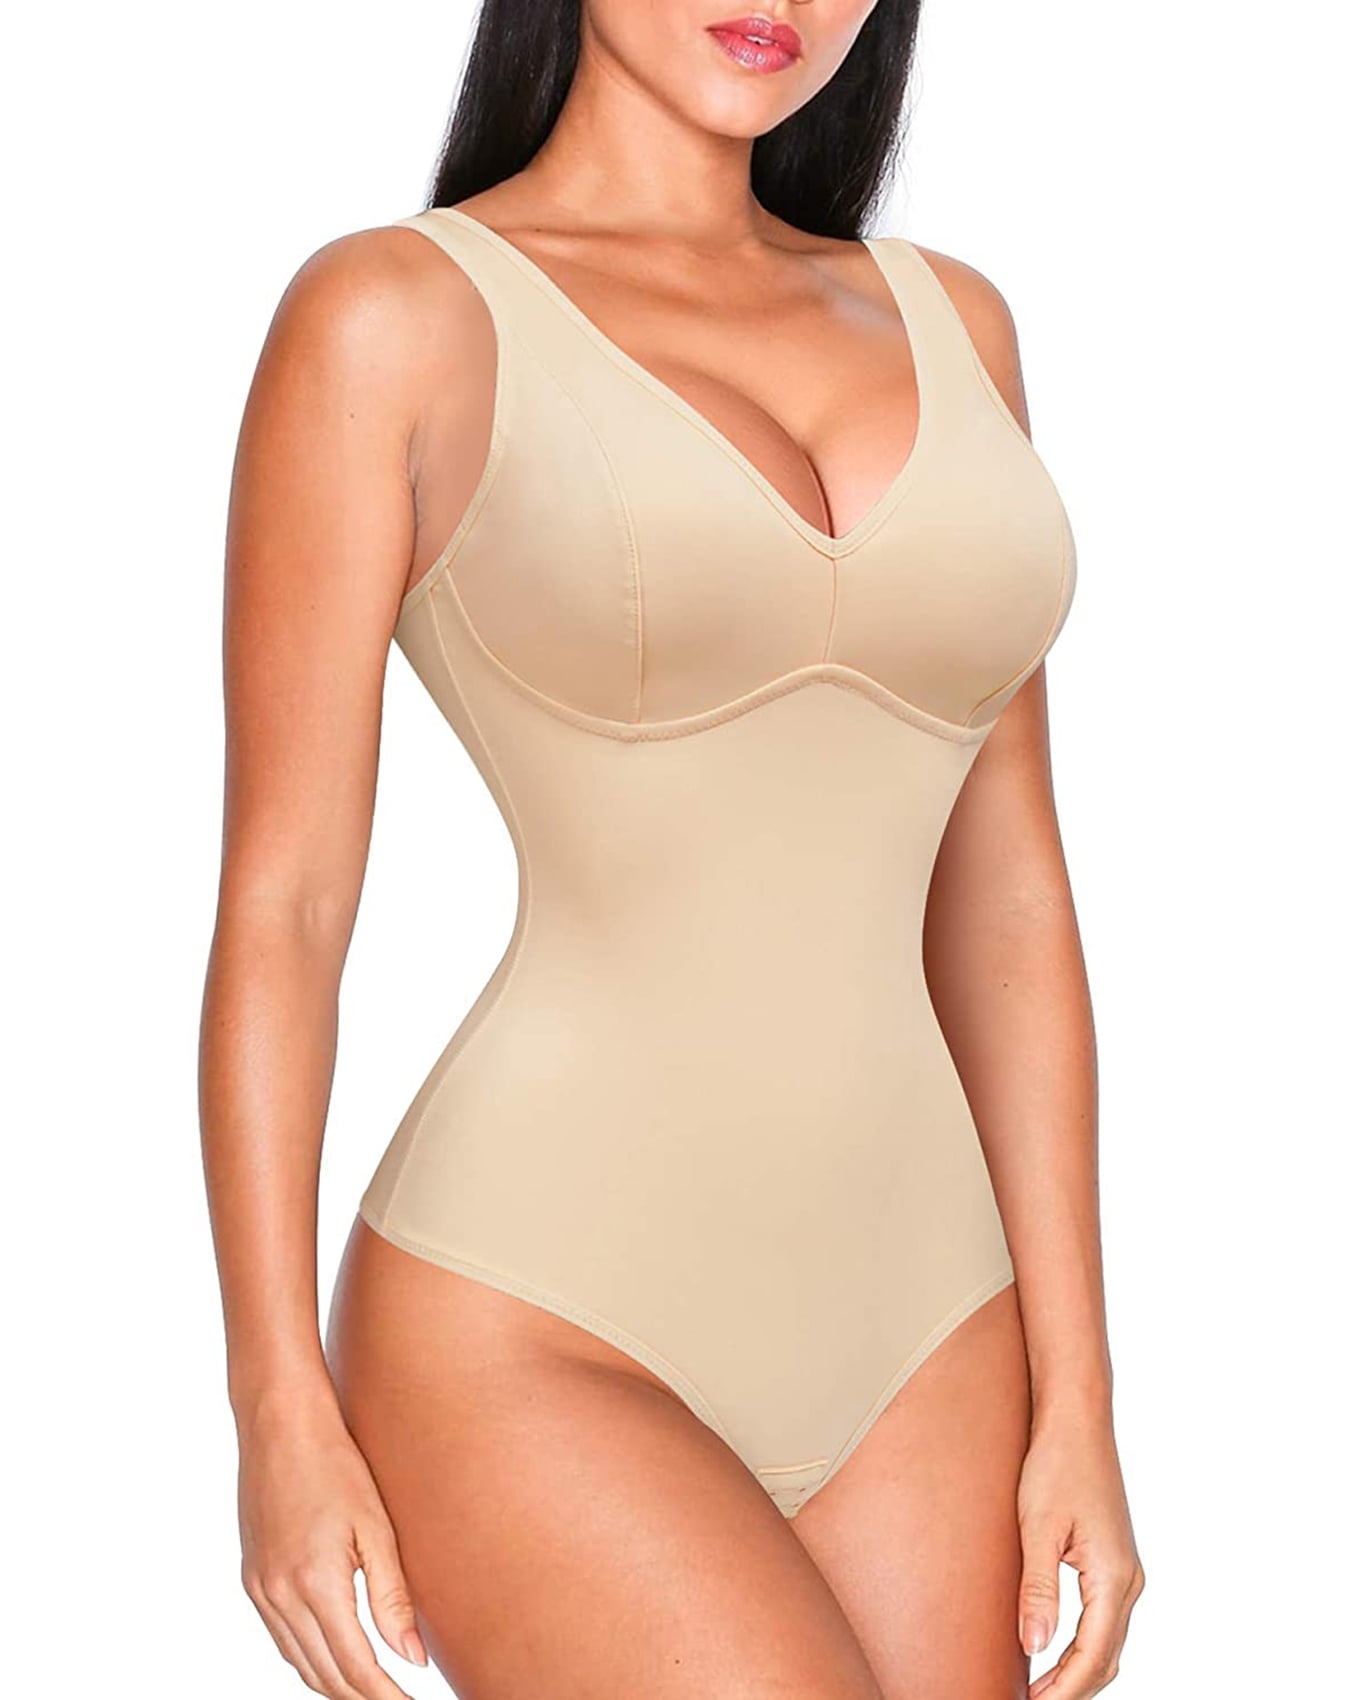 Women Compression Full Body Shaper Tummy Control Underwear Slimming Jumpsuit HOT